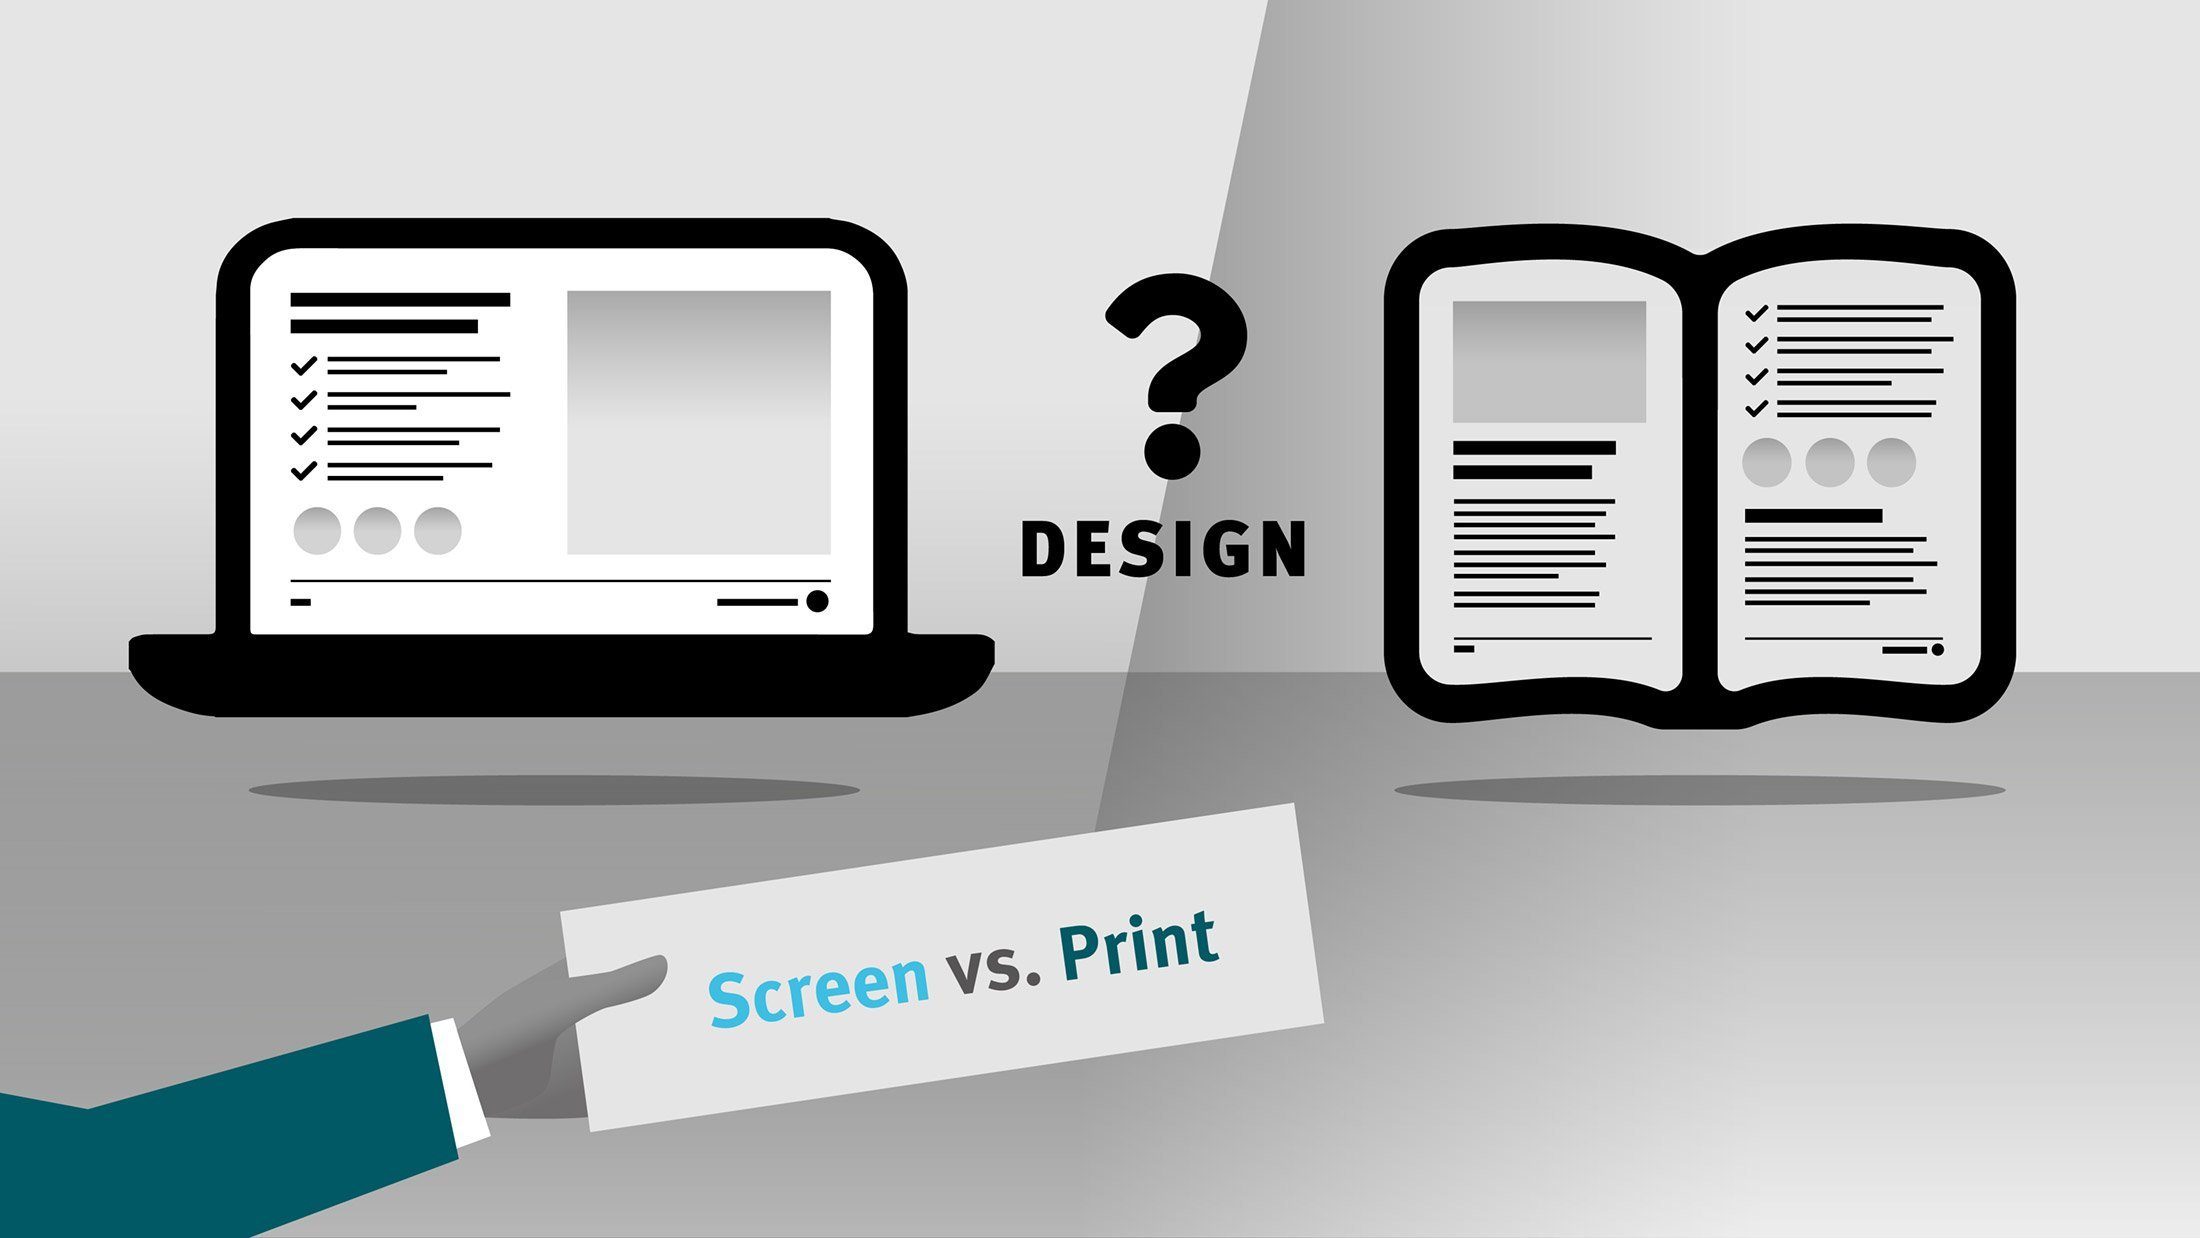 Screen vs. Print